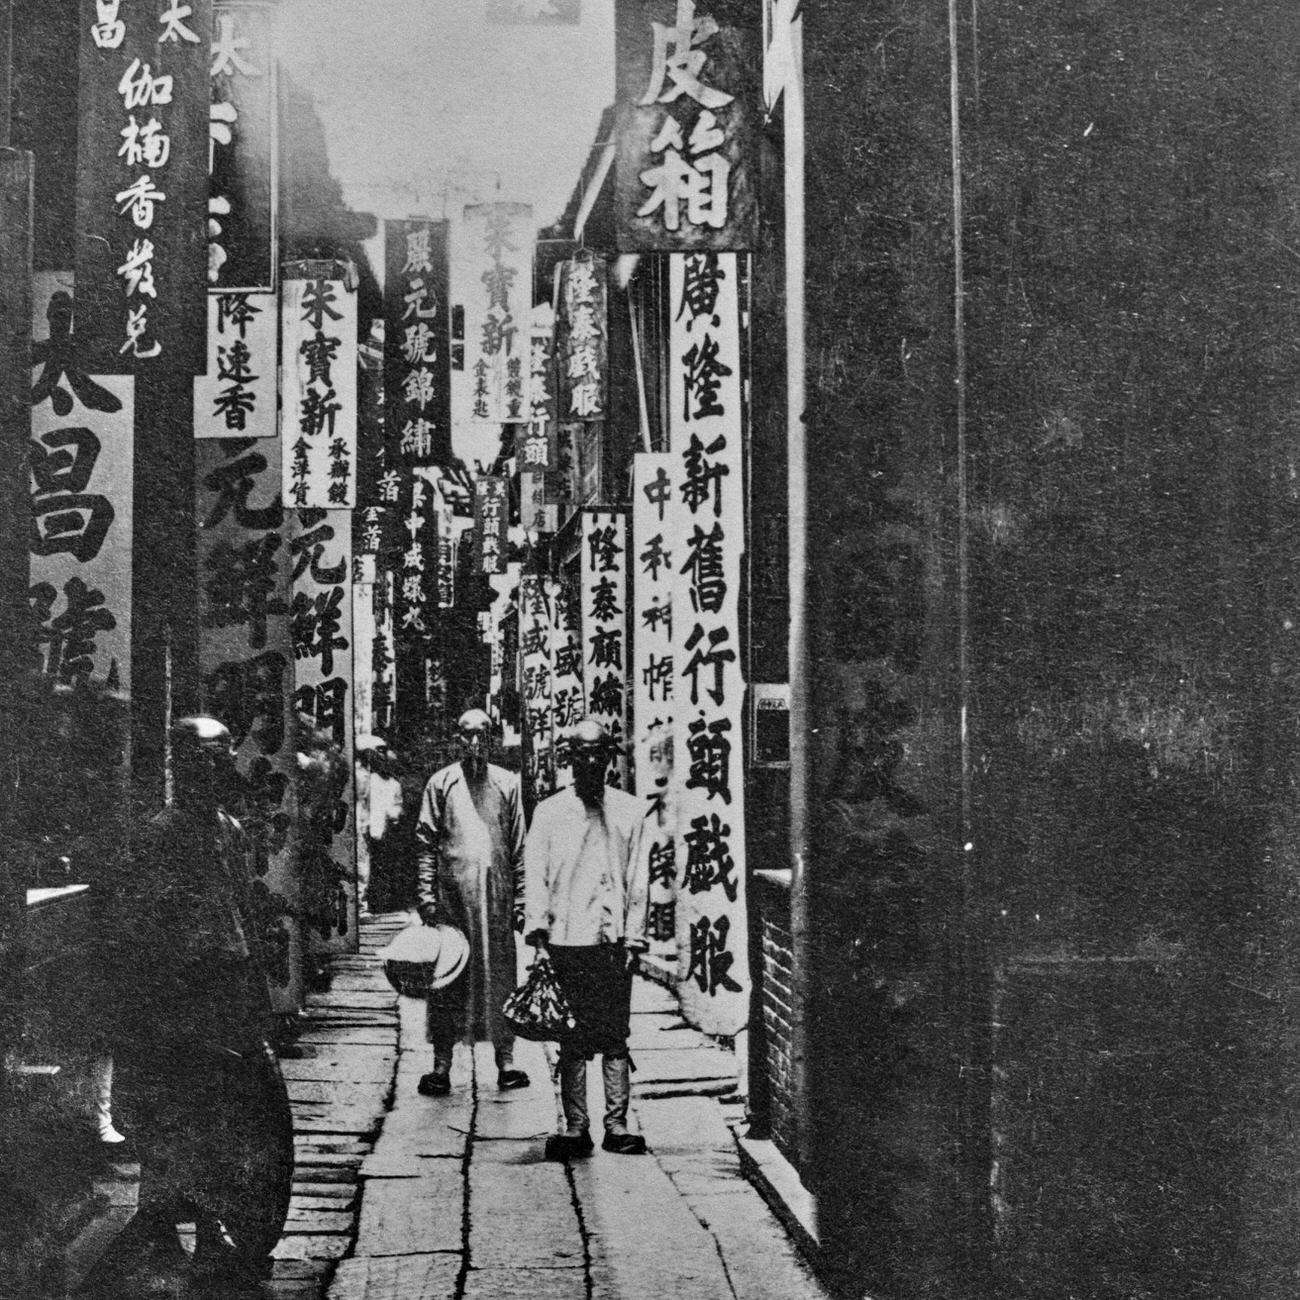 Pedestrians on Physic Street, Canton, China, 1875